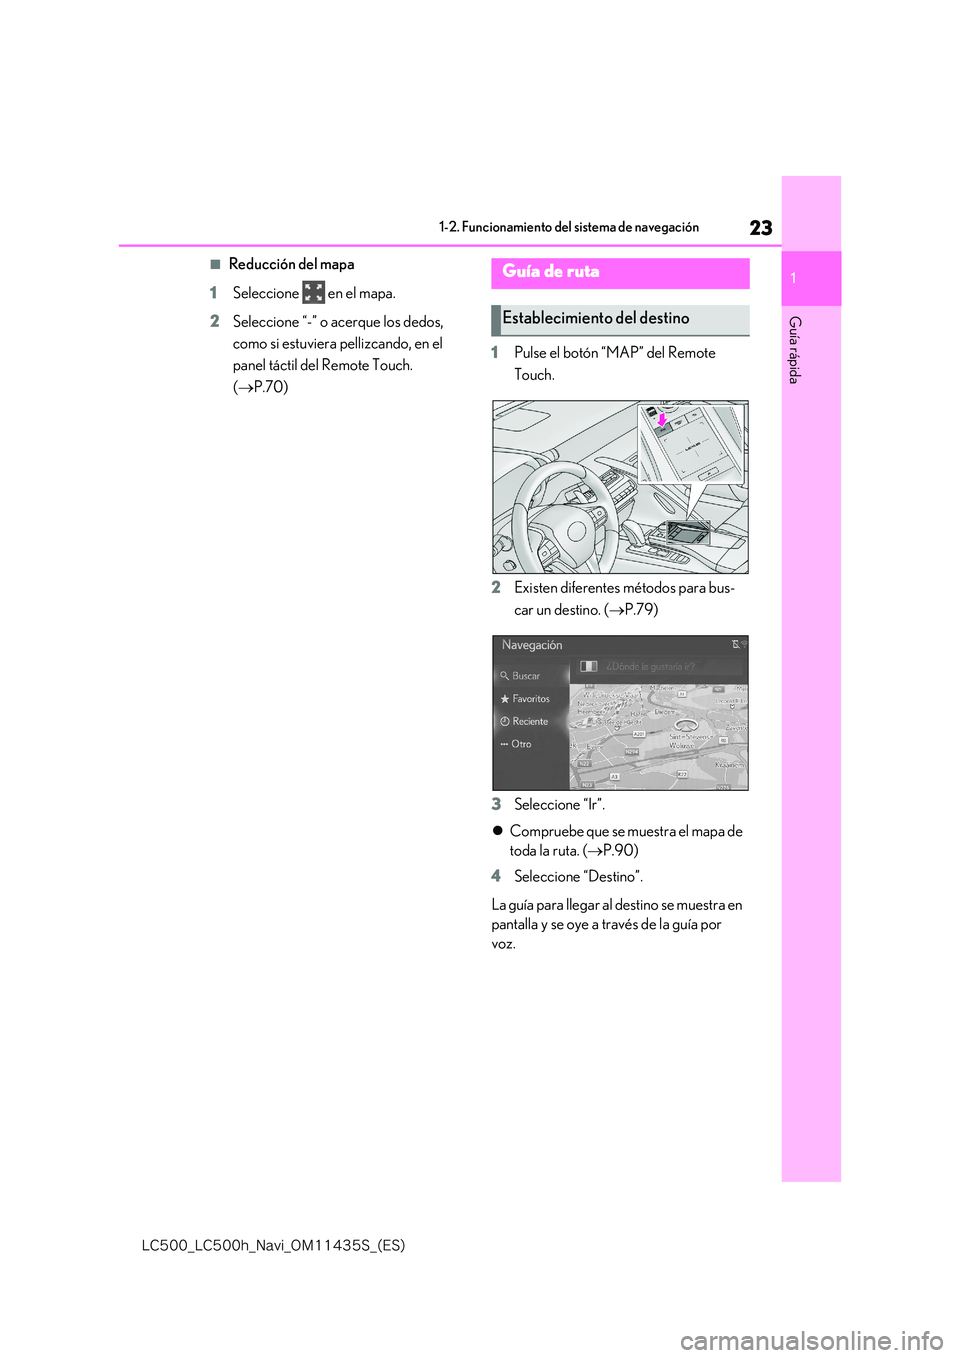 lexus LC500 2018  Manual de navegación (in Spanish) 23
1
�-�$����@�-�$����I�@�/�B�W�J�@�0�.������4�@�	�&�4�

1-2. Funcionamiento del sistema de navegación
Guía rápida
■Reducción del mapa 
1 Seleccione   en el mapa. 
2 Seleccione “-�